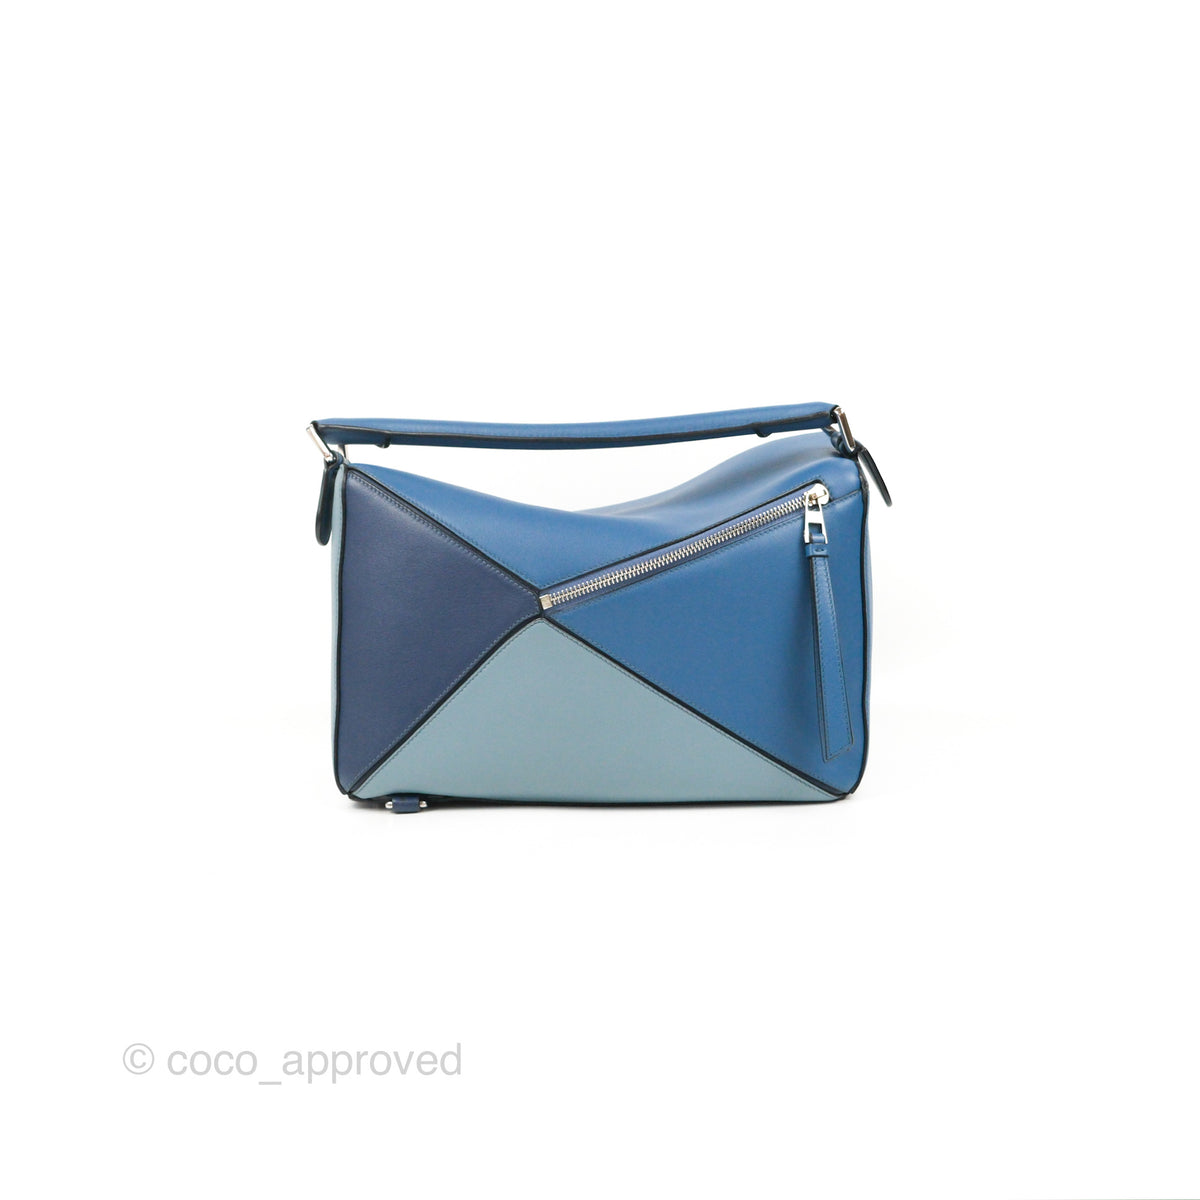 Loewe Small Puzzle Bag in Aqua, Light Blue & Stone Blue